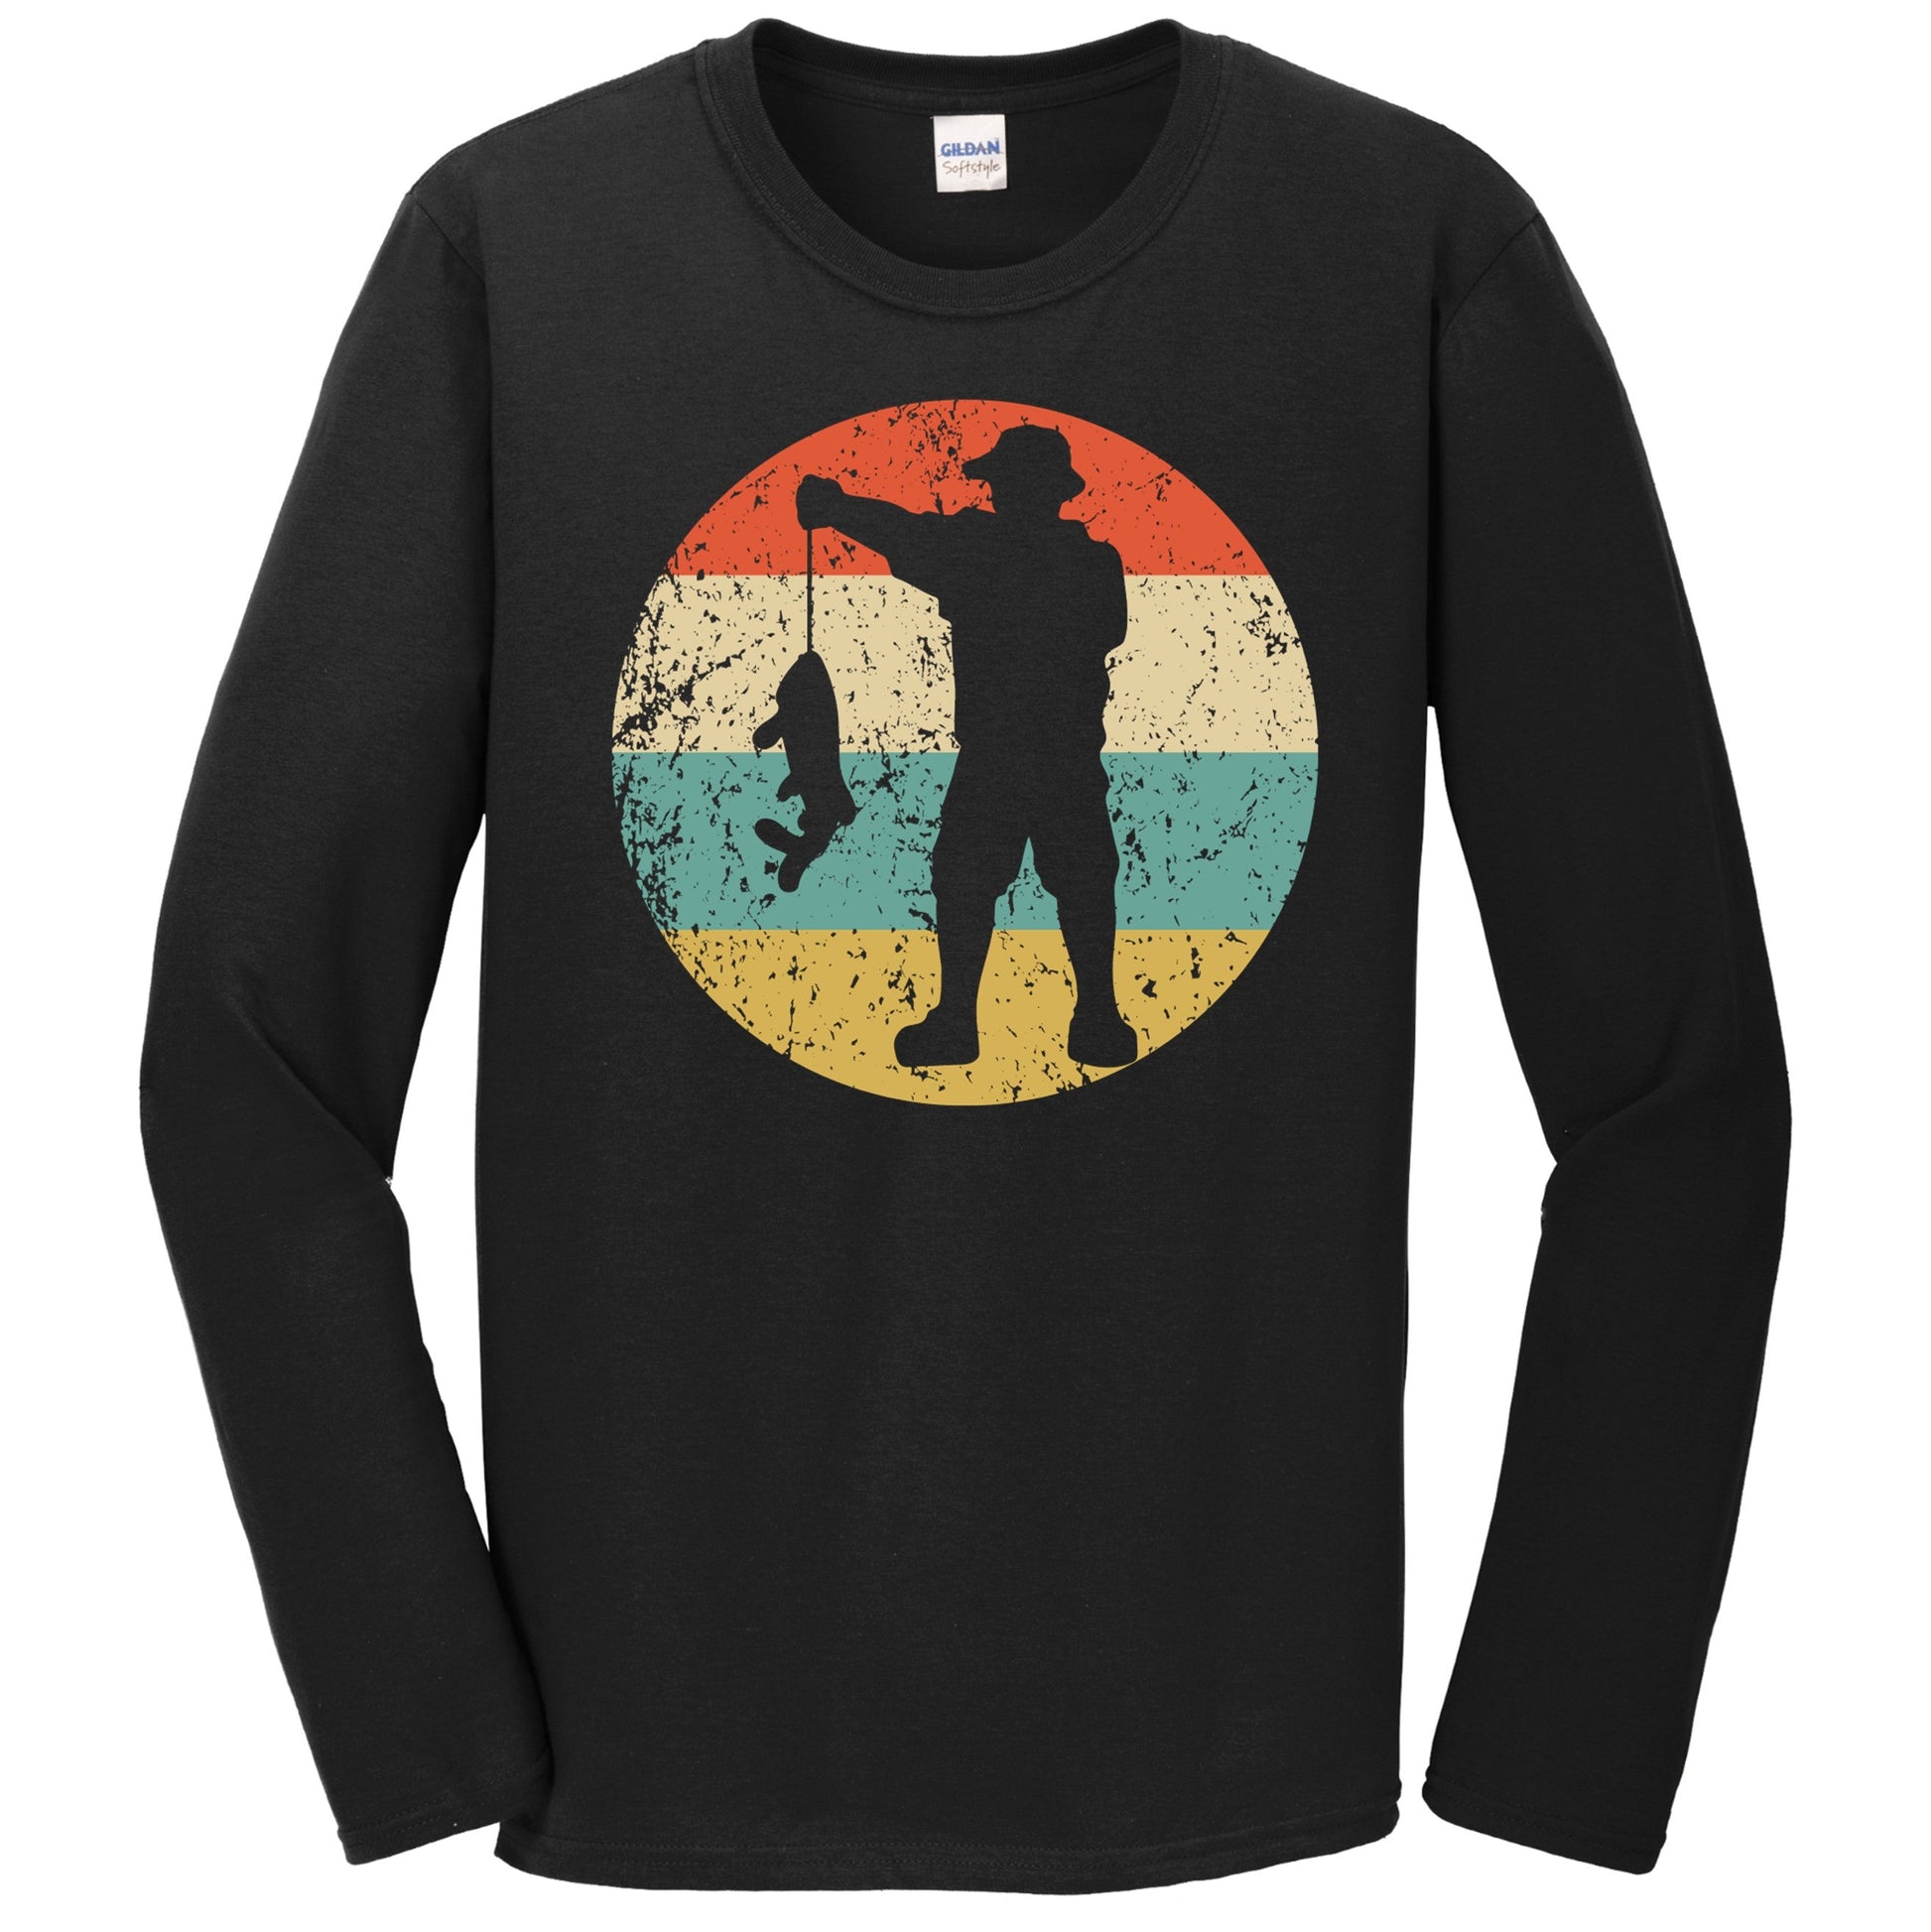 Fishing apparel T-Shirts, Unique Designs